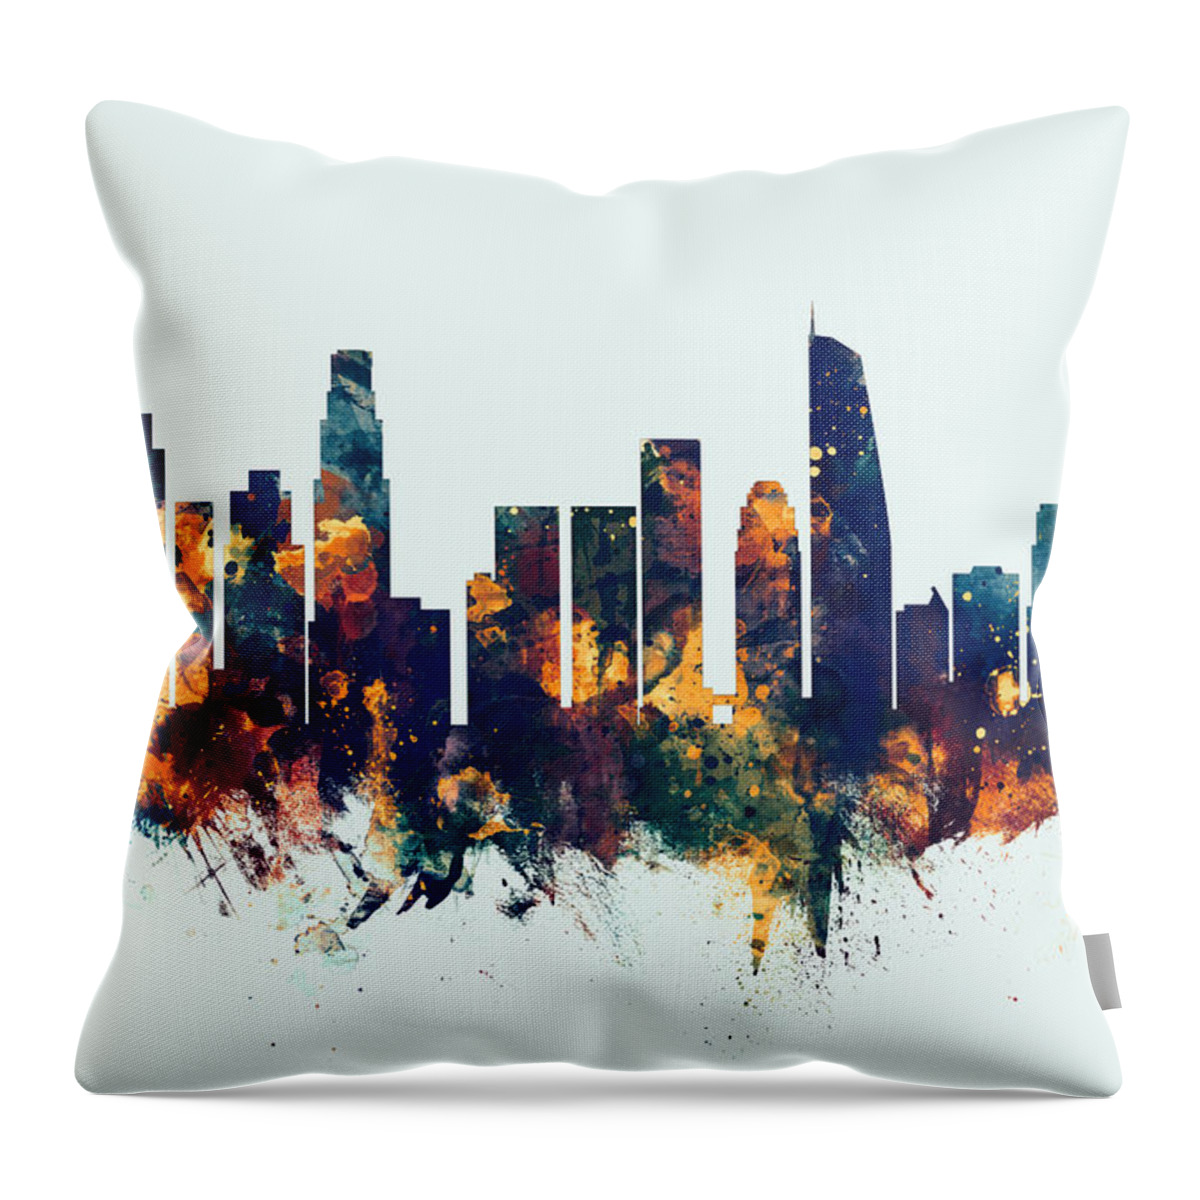 Los Angeles Throw Pillow featuring the digital art Los Angeles California Skyline by Michael Tompsett